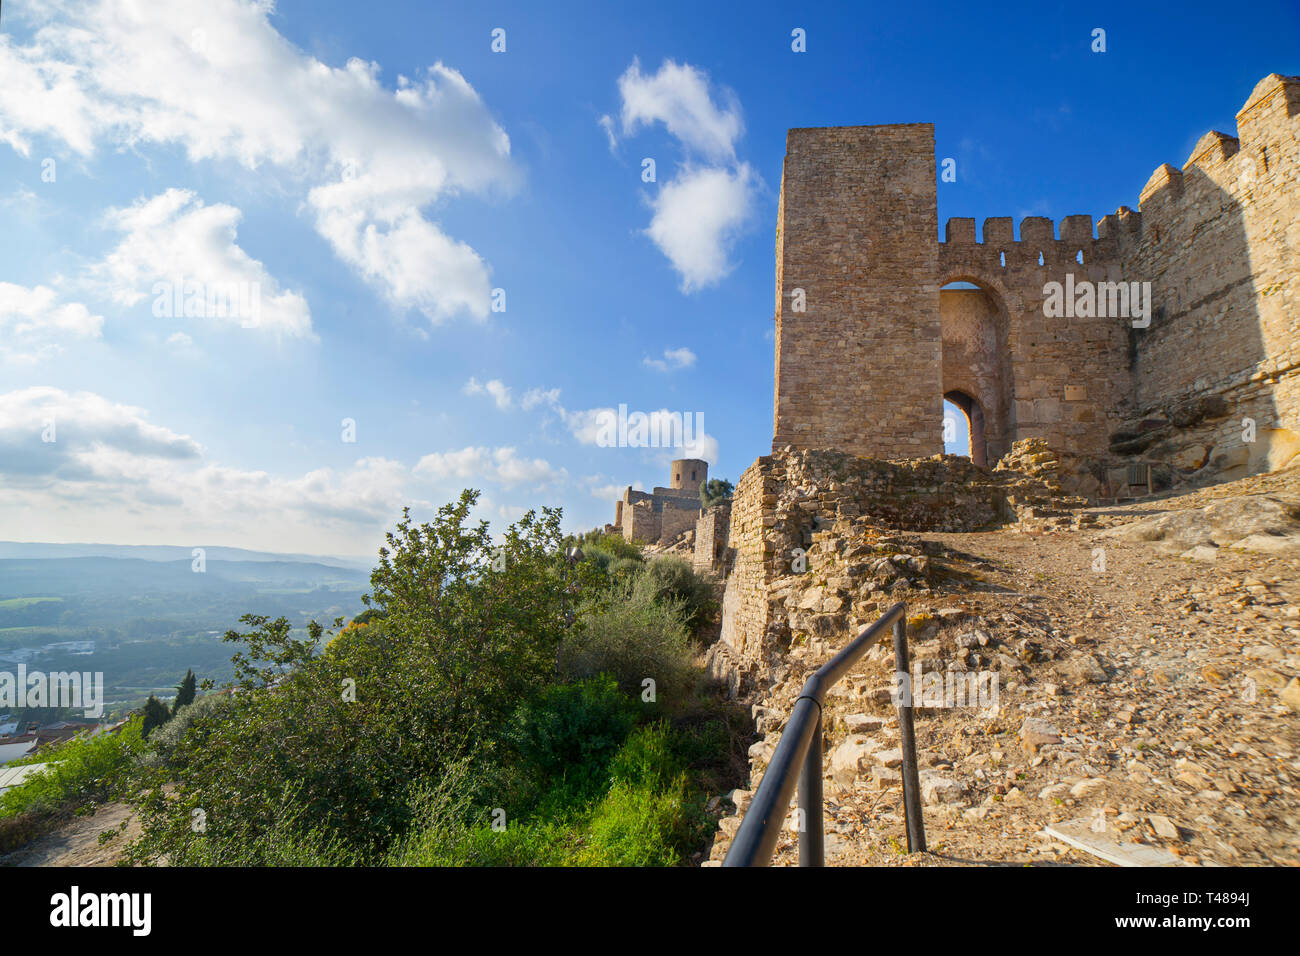 Castle of Jimena de la Frontera, Cadiz, Spain. Main entrance overlooking the town Stock Photo